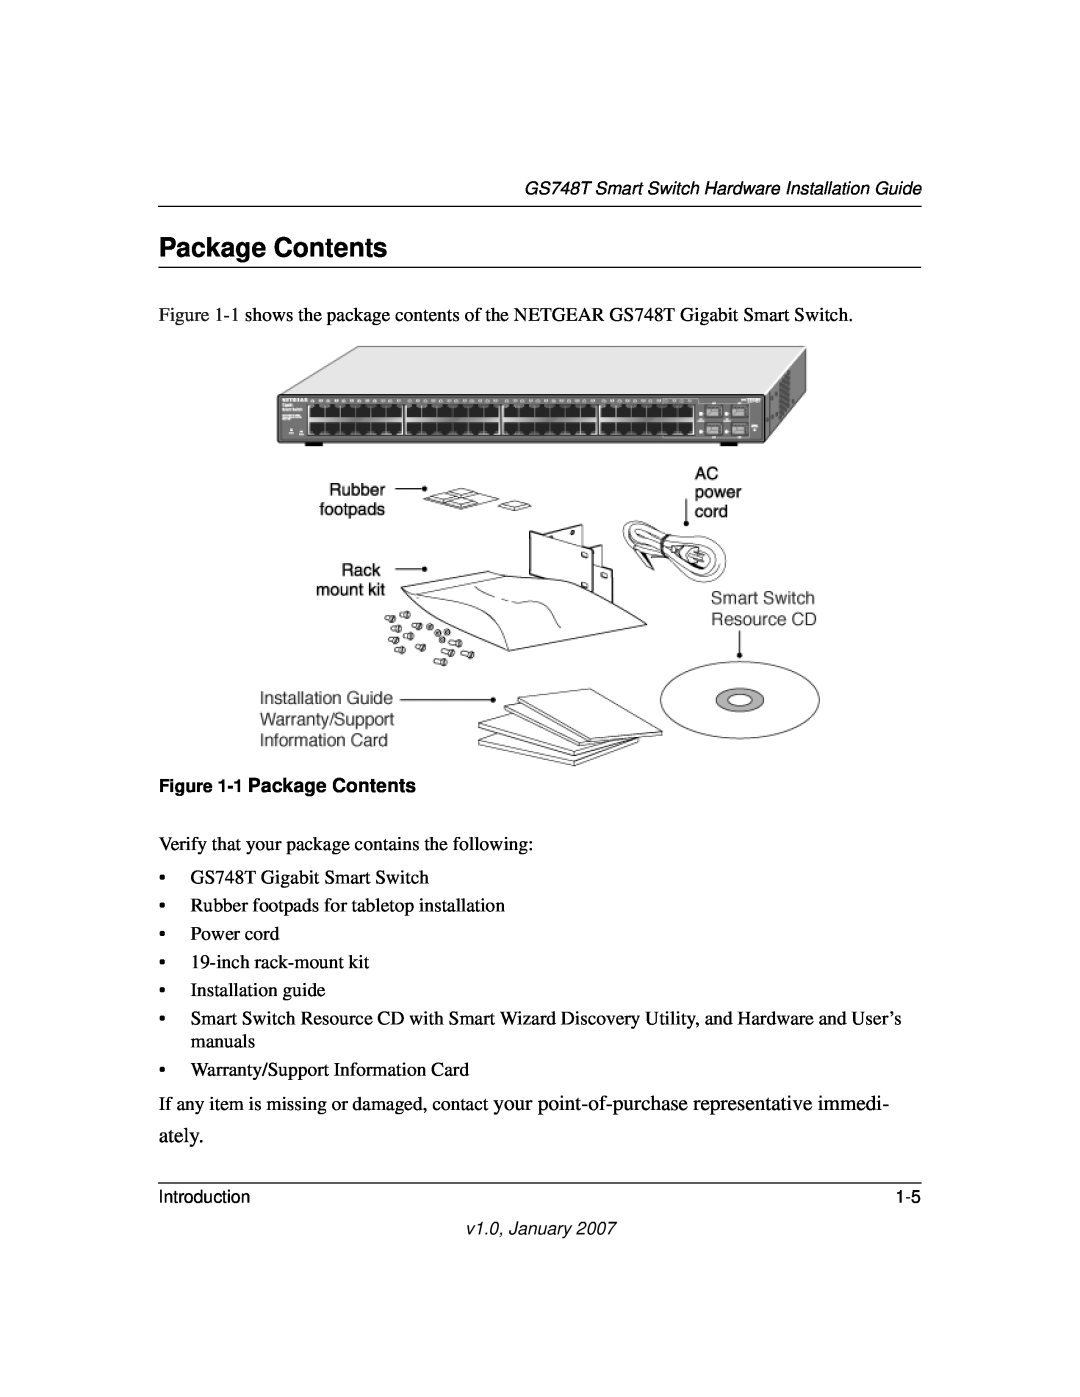 NETGEAR GS748T manual 1 Package Contents 